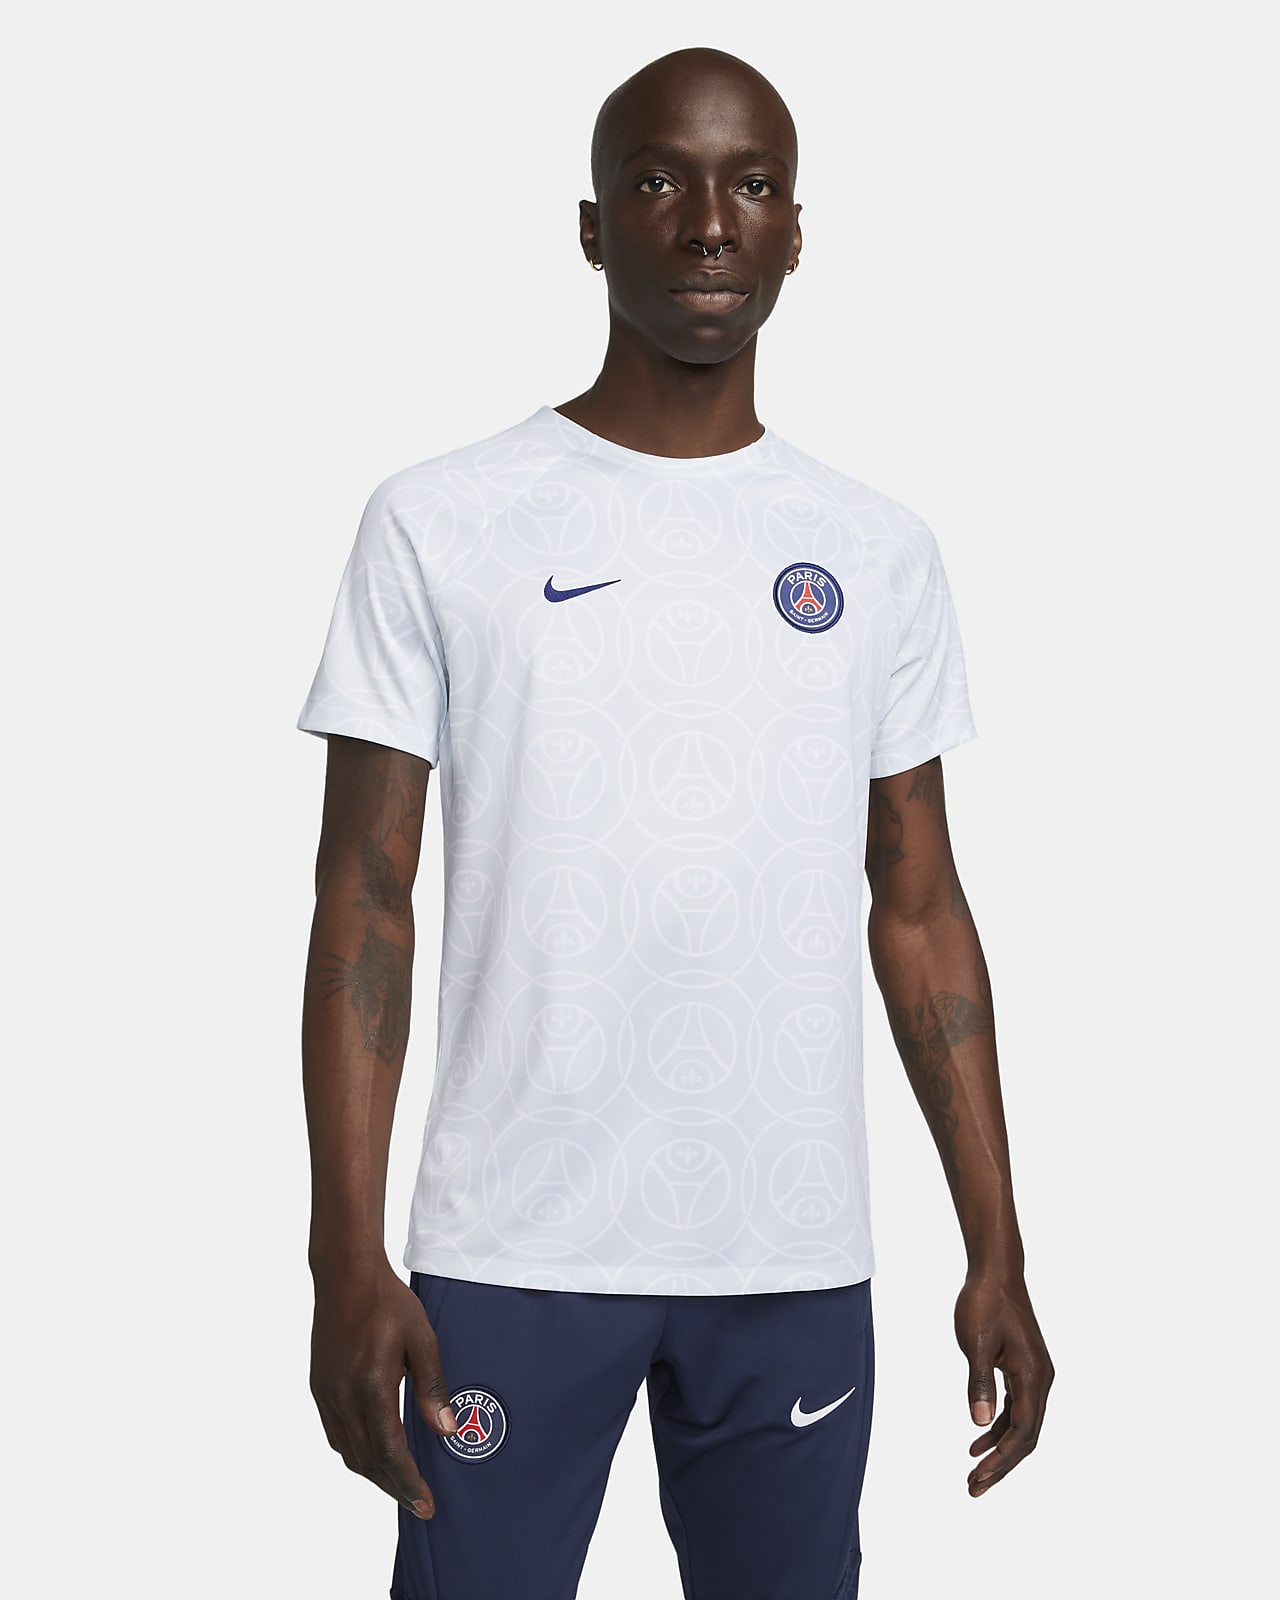 Saint-Germain Men's Nike Dri-FIT Pre-Match Nike.com